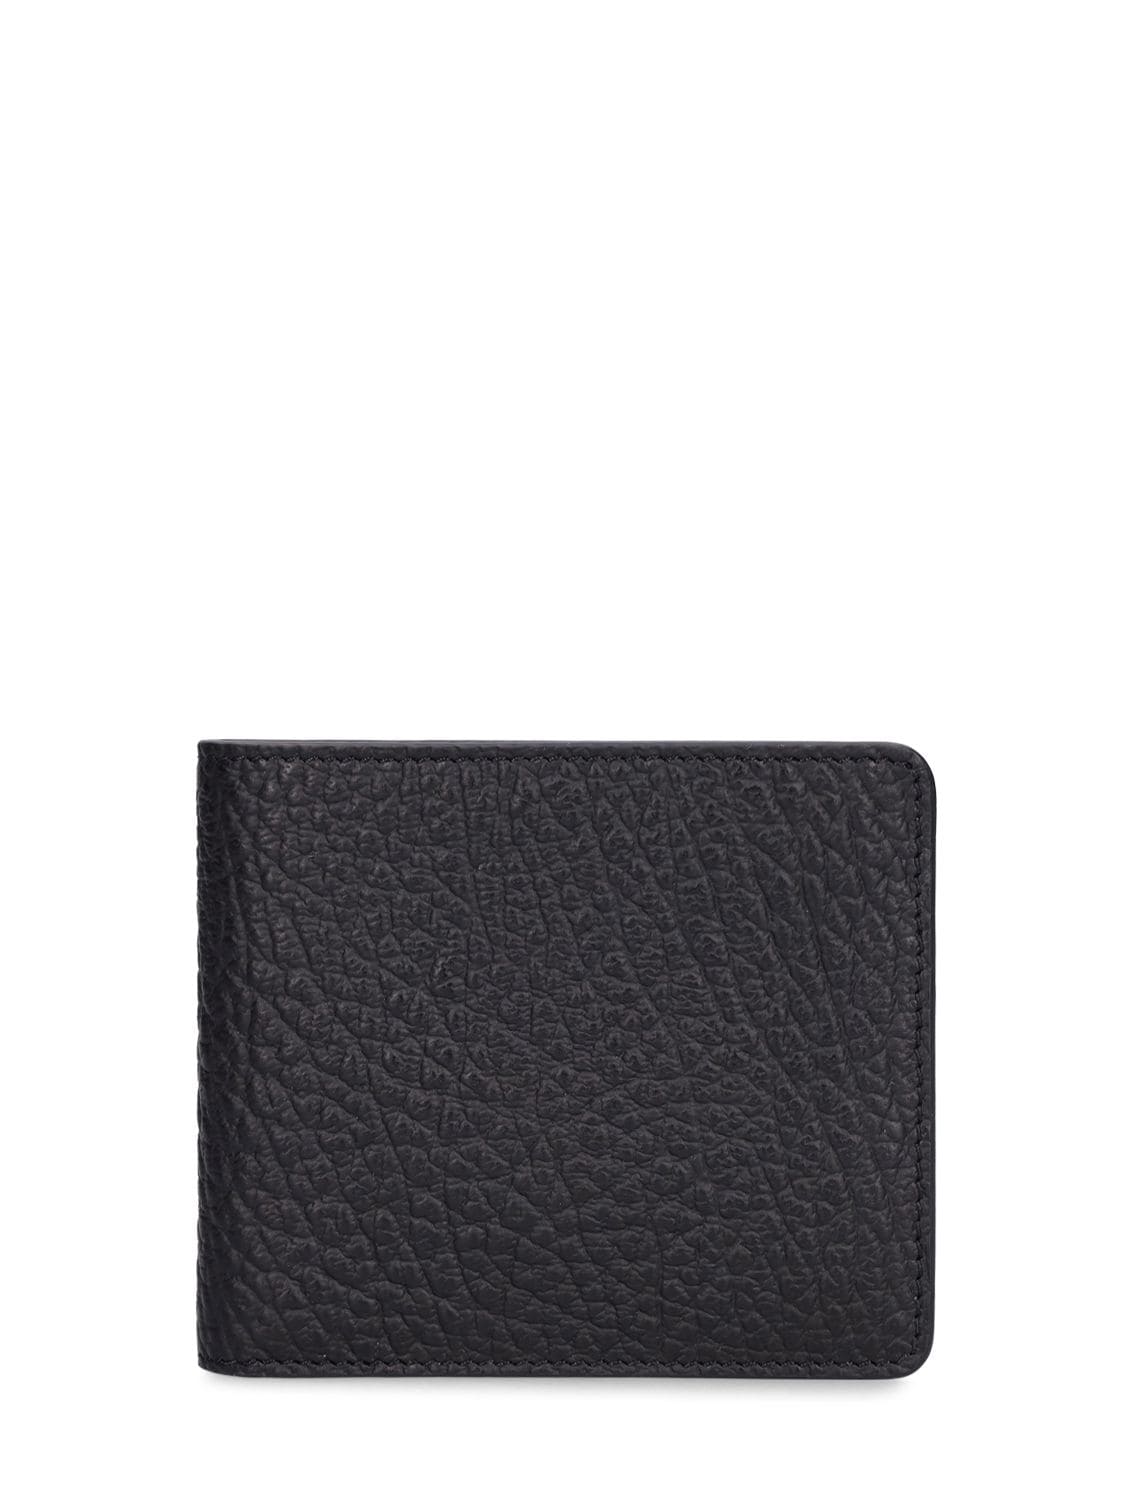 Maison Margiela Grained Leather Slim Wallet In Black